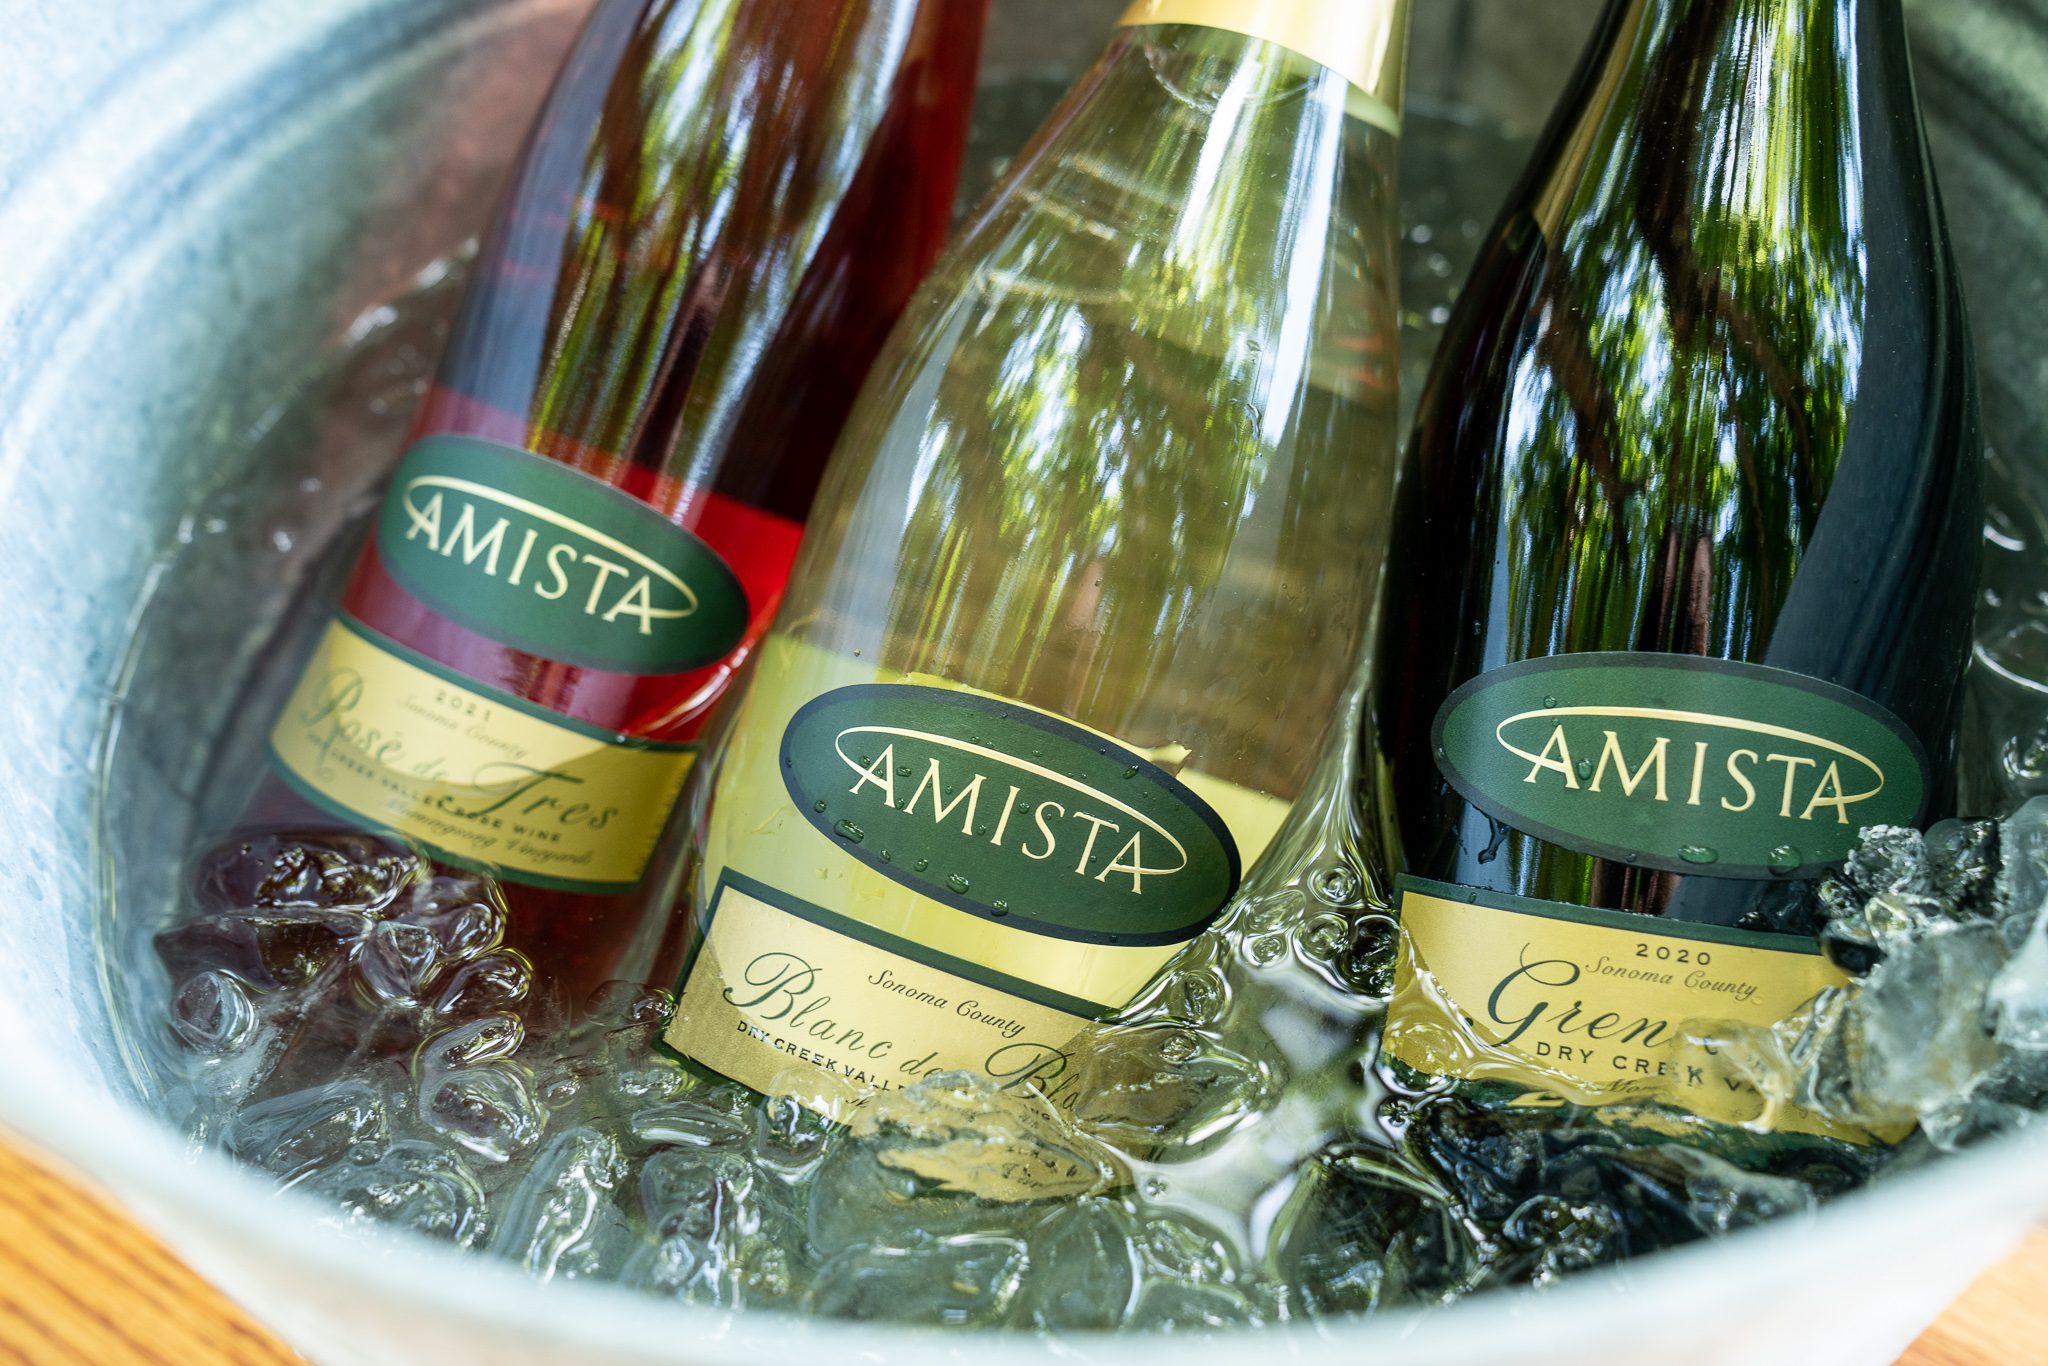 Amista Vineyards sparkling wine, 3 bottles